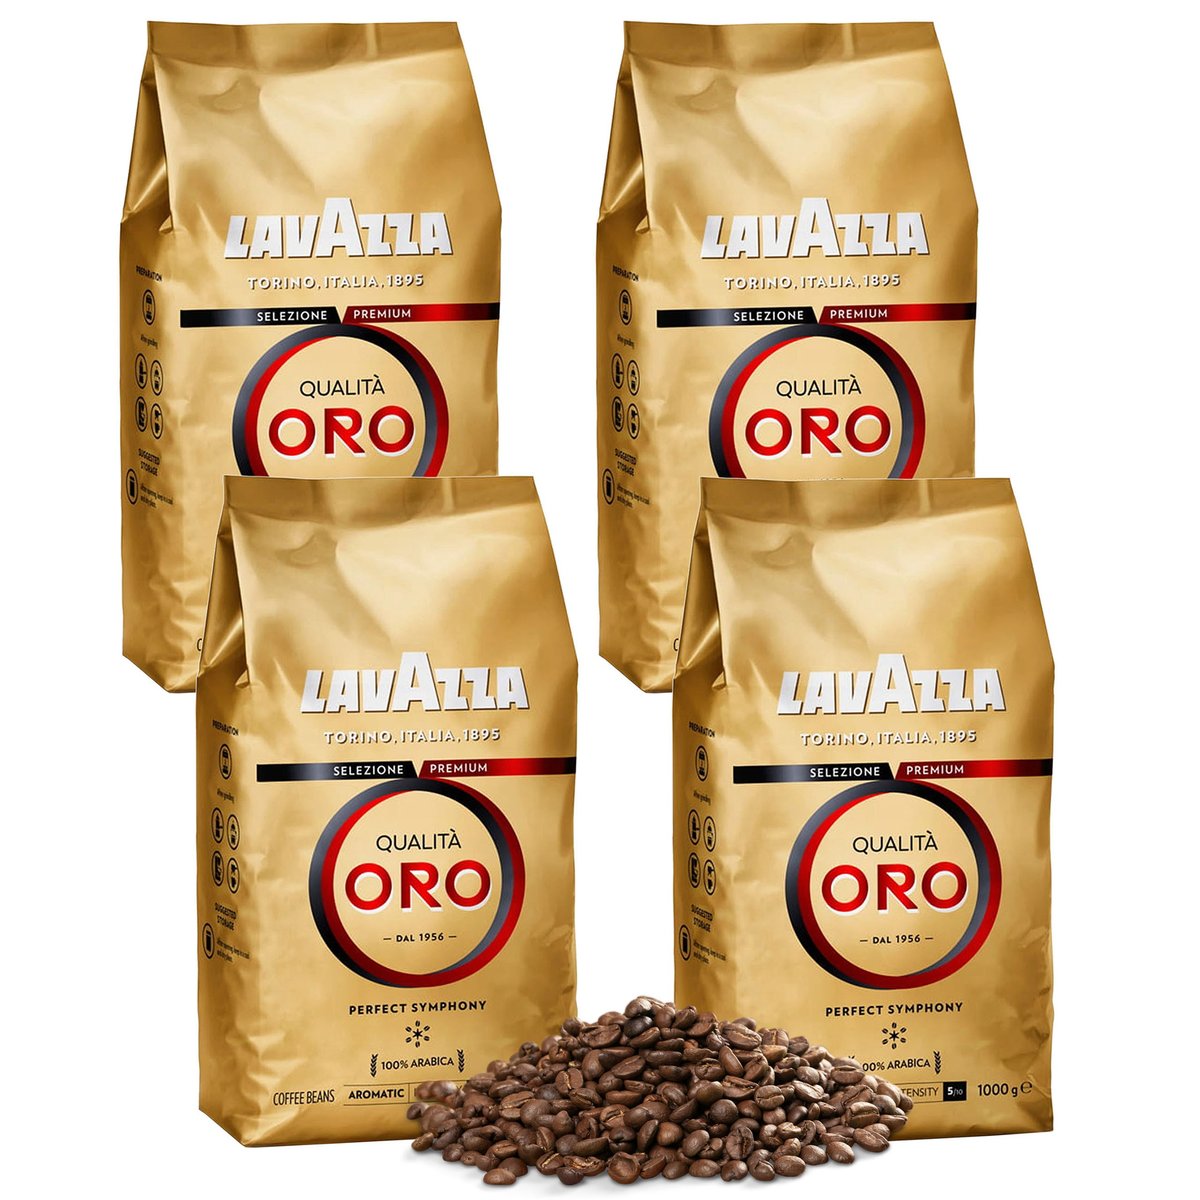 LAVAZZA Qualita Oro-Kawa ziarnista średnio palona, kawa włoska 4 kg